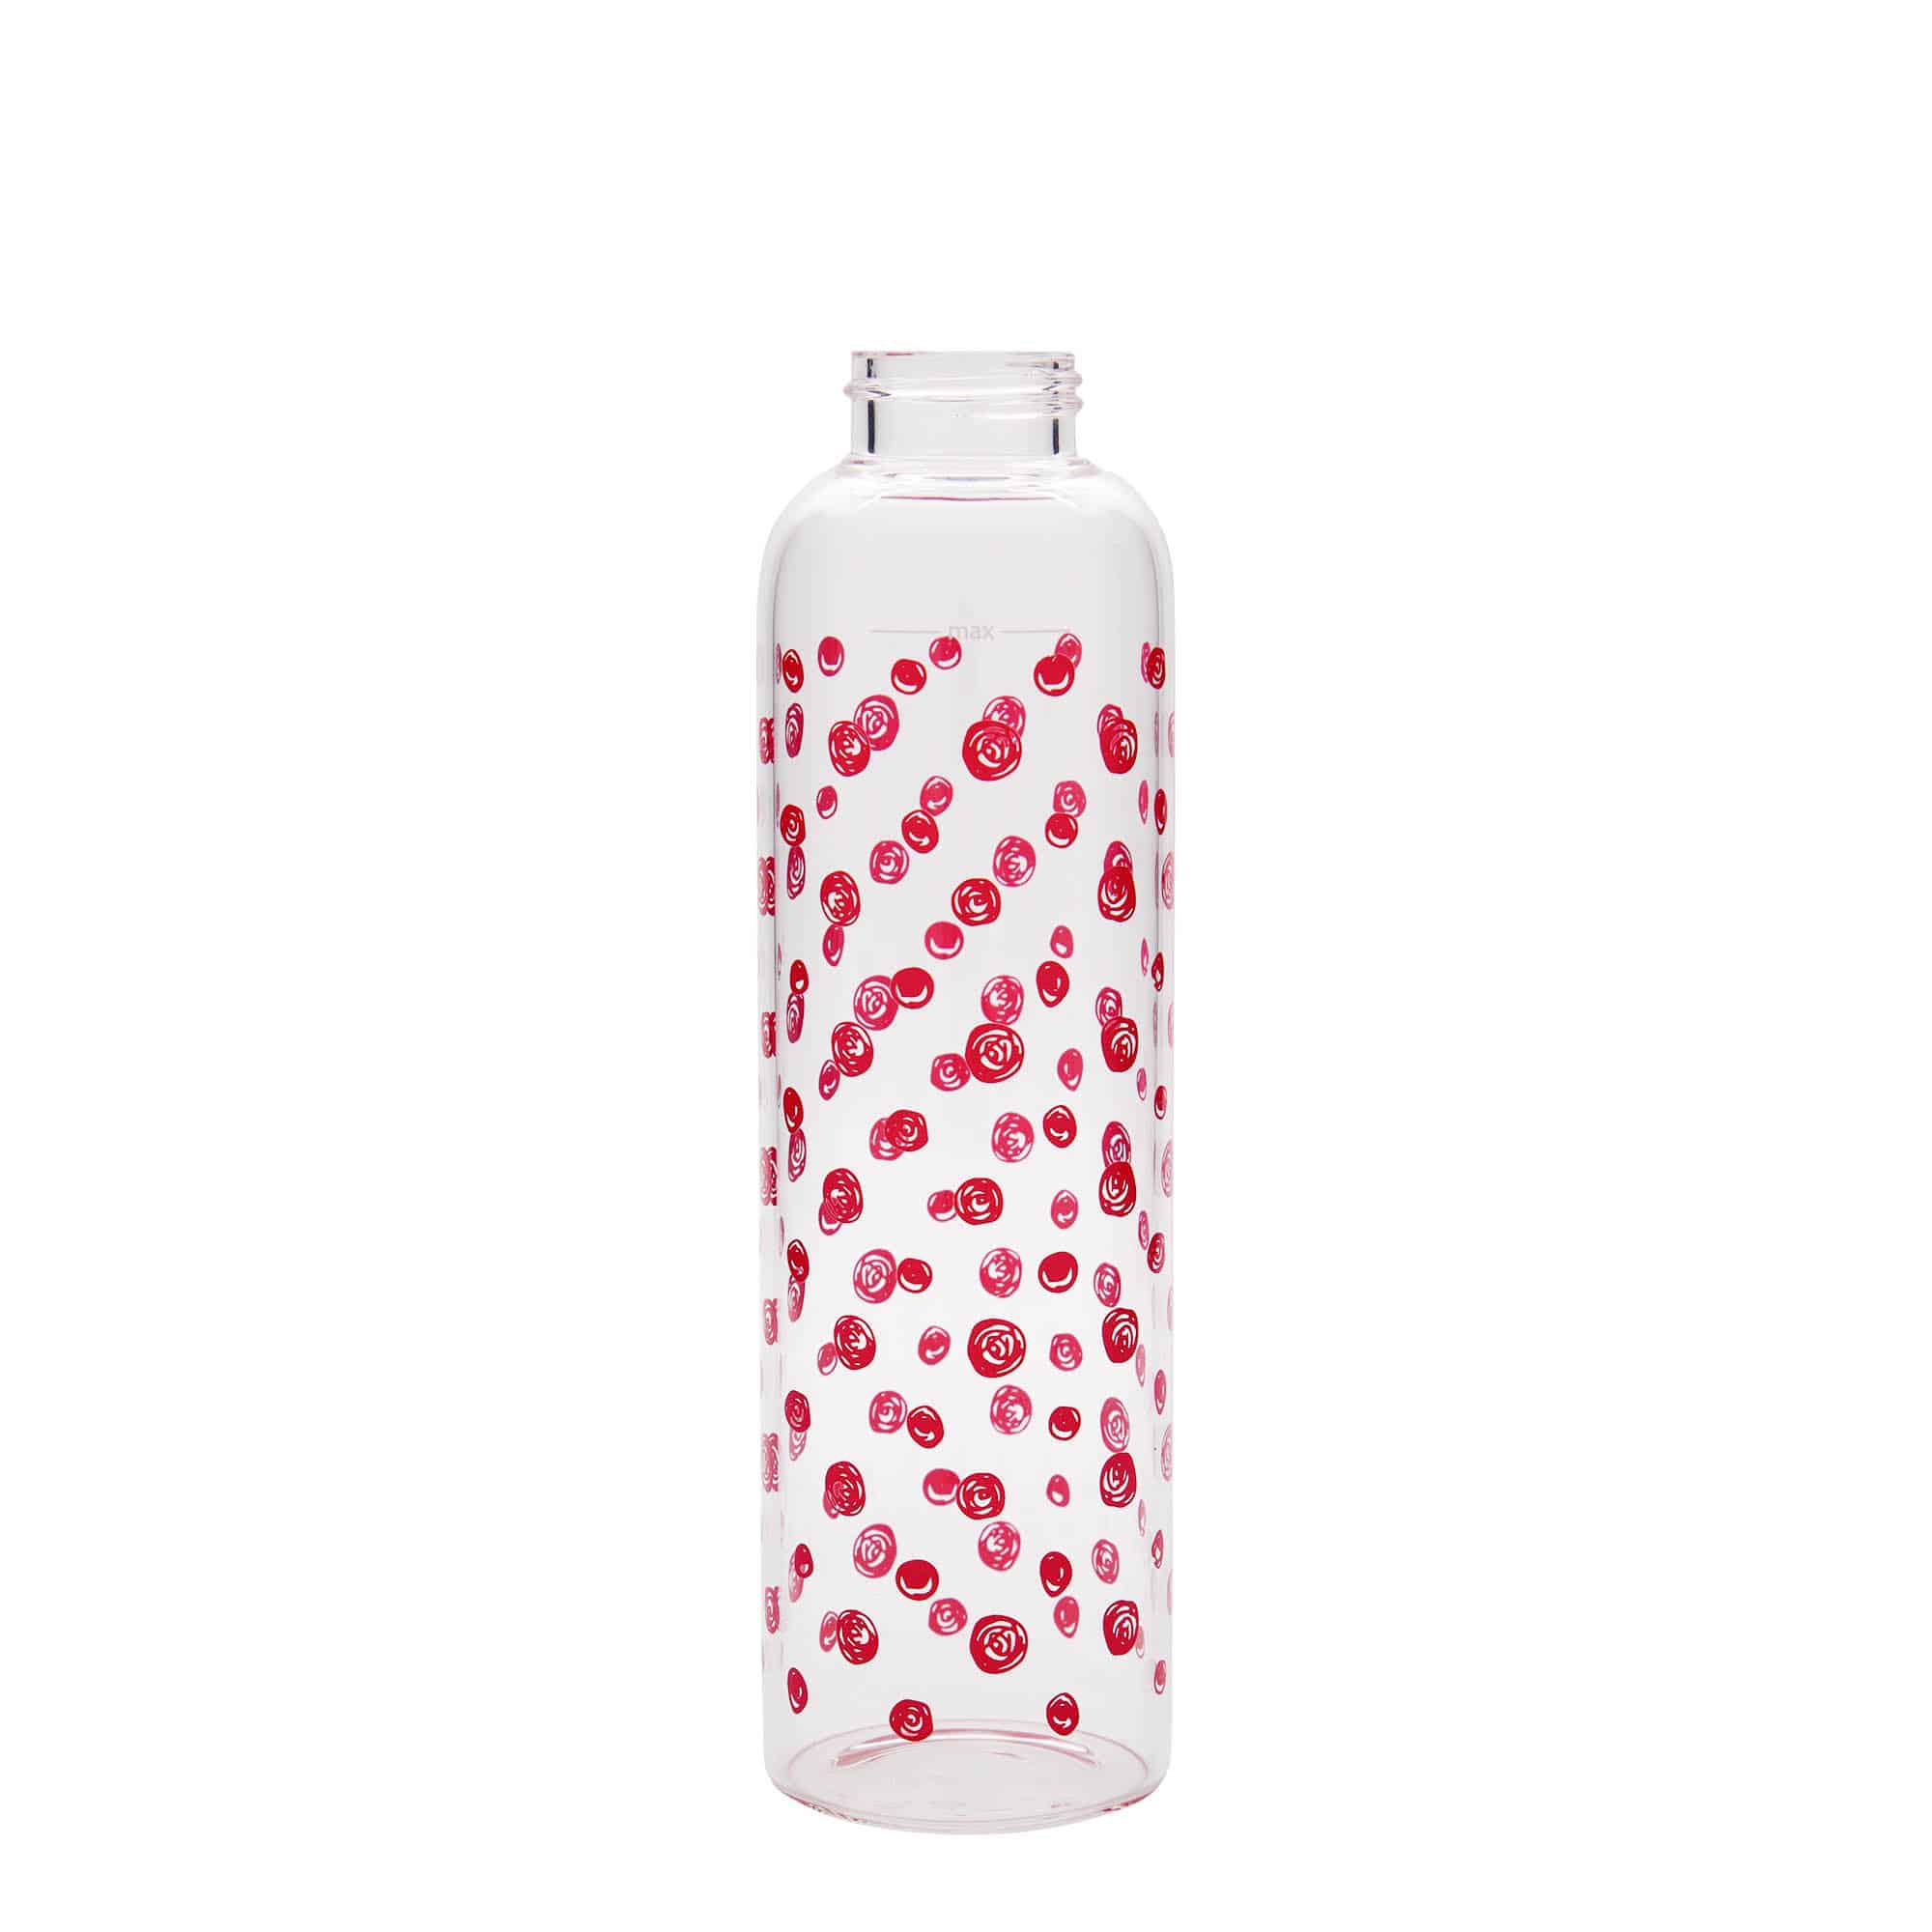 500 ml water bottle 'Perseus', print: red dots, closure: screw cap